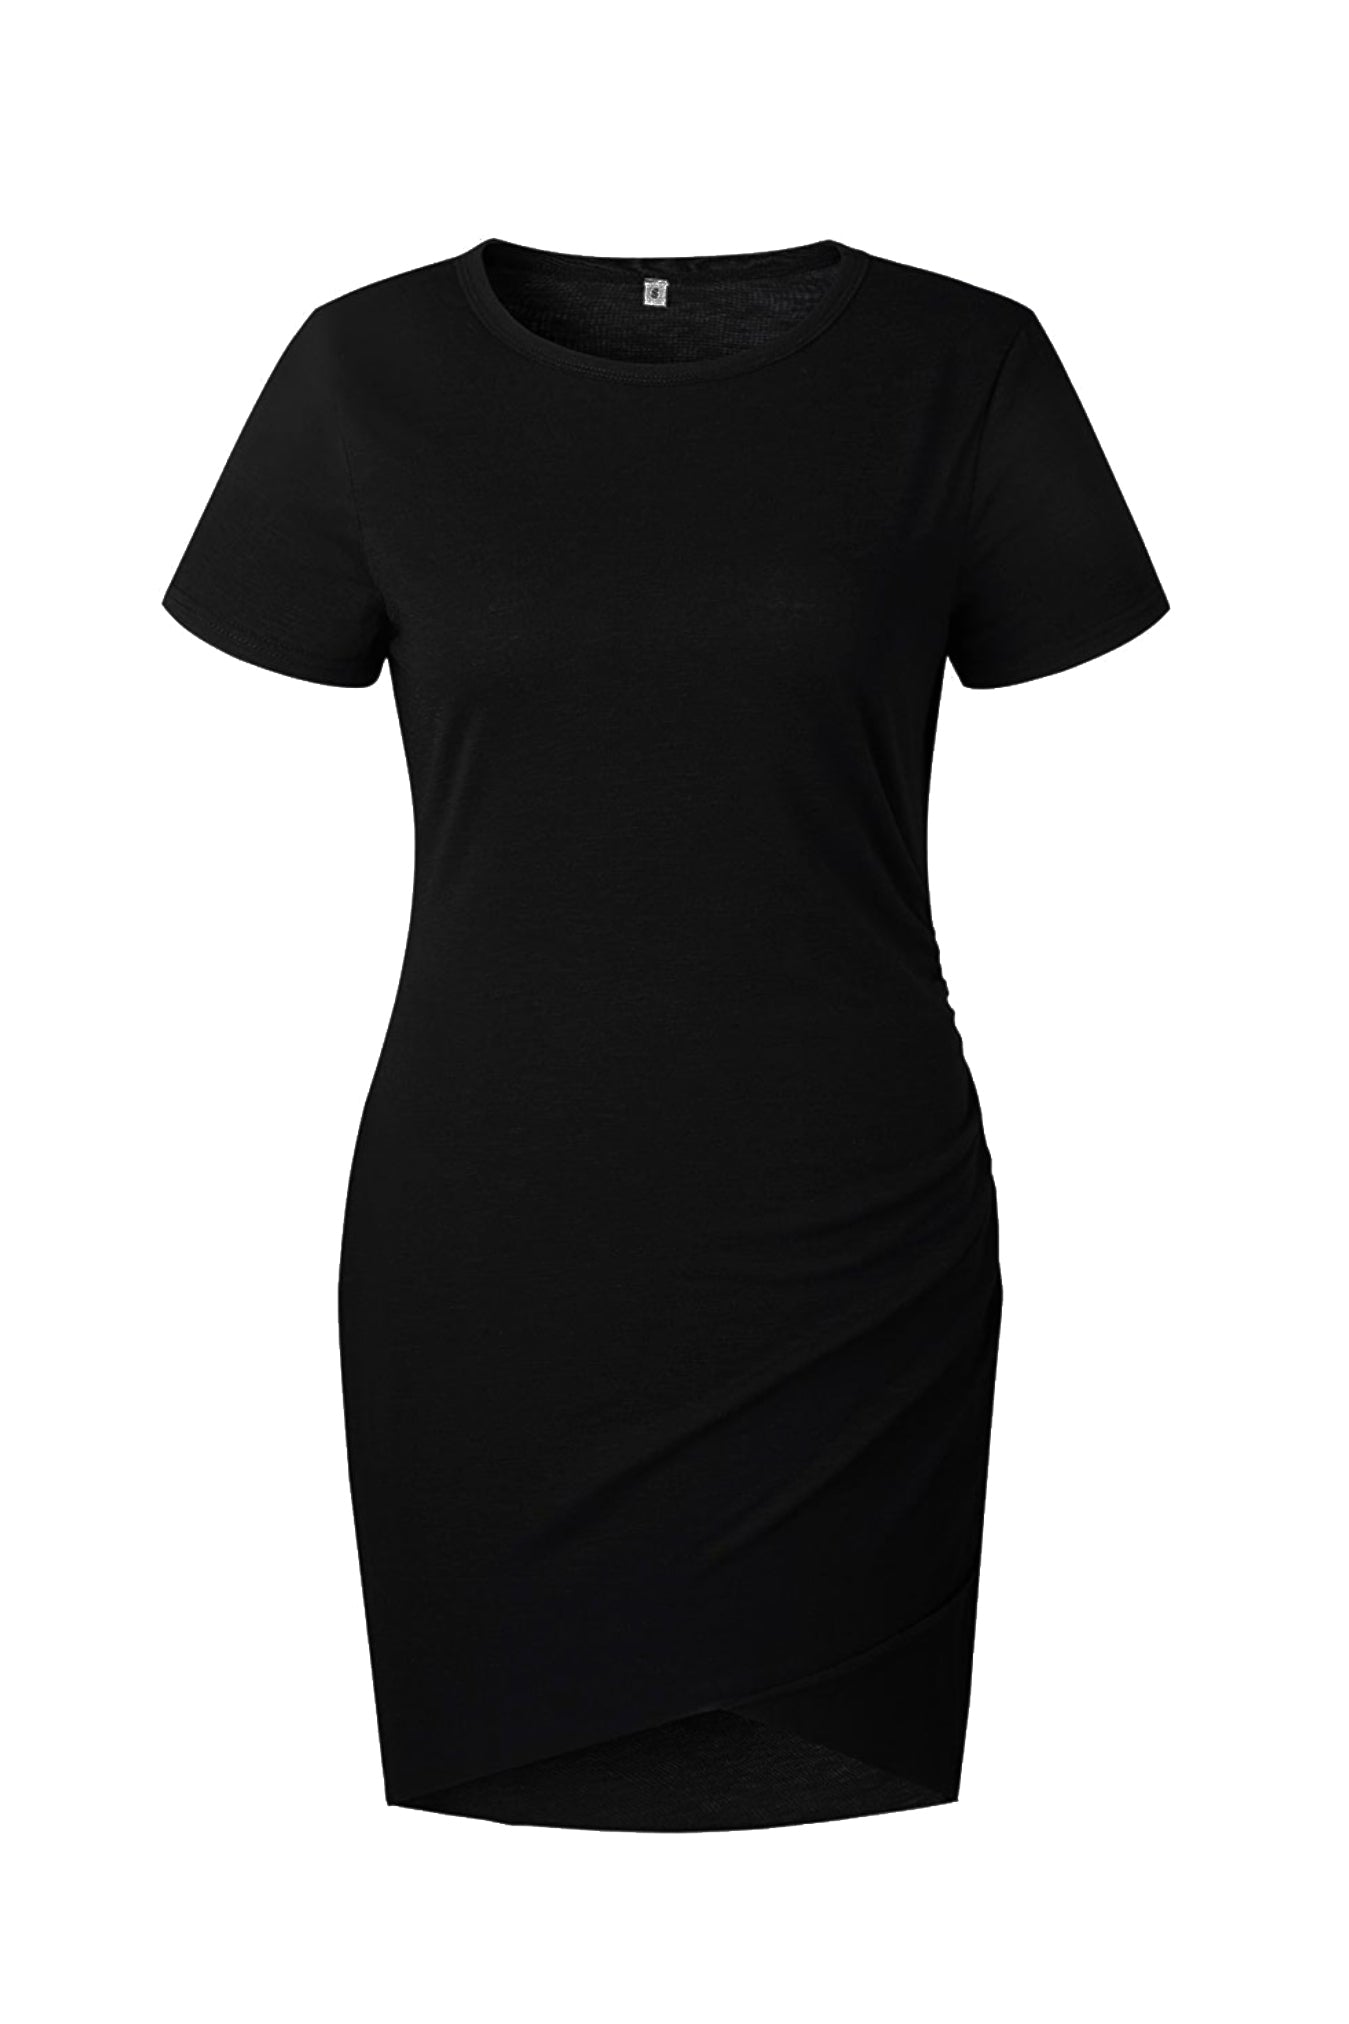 Glow Fashion Boutique Short Sleeve Black Ruched Dress 